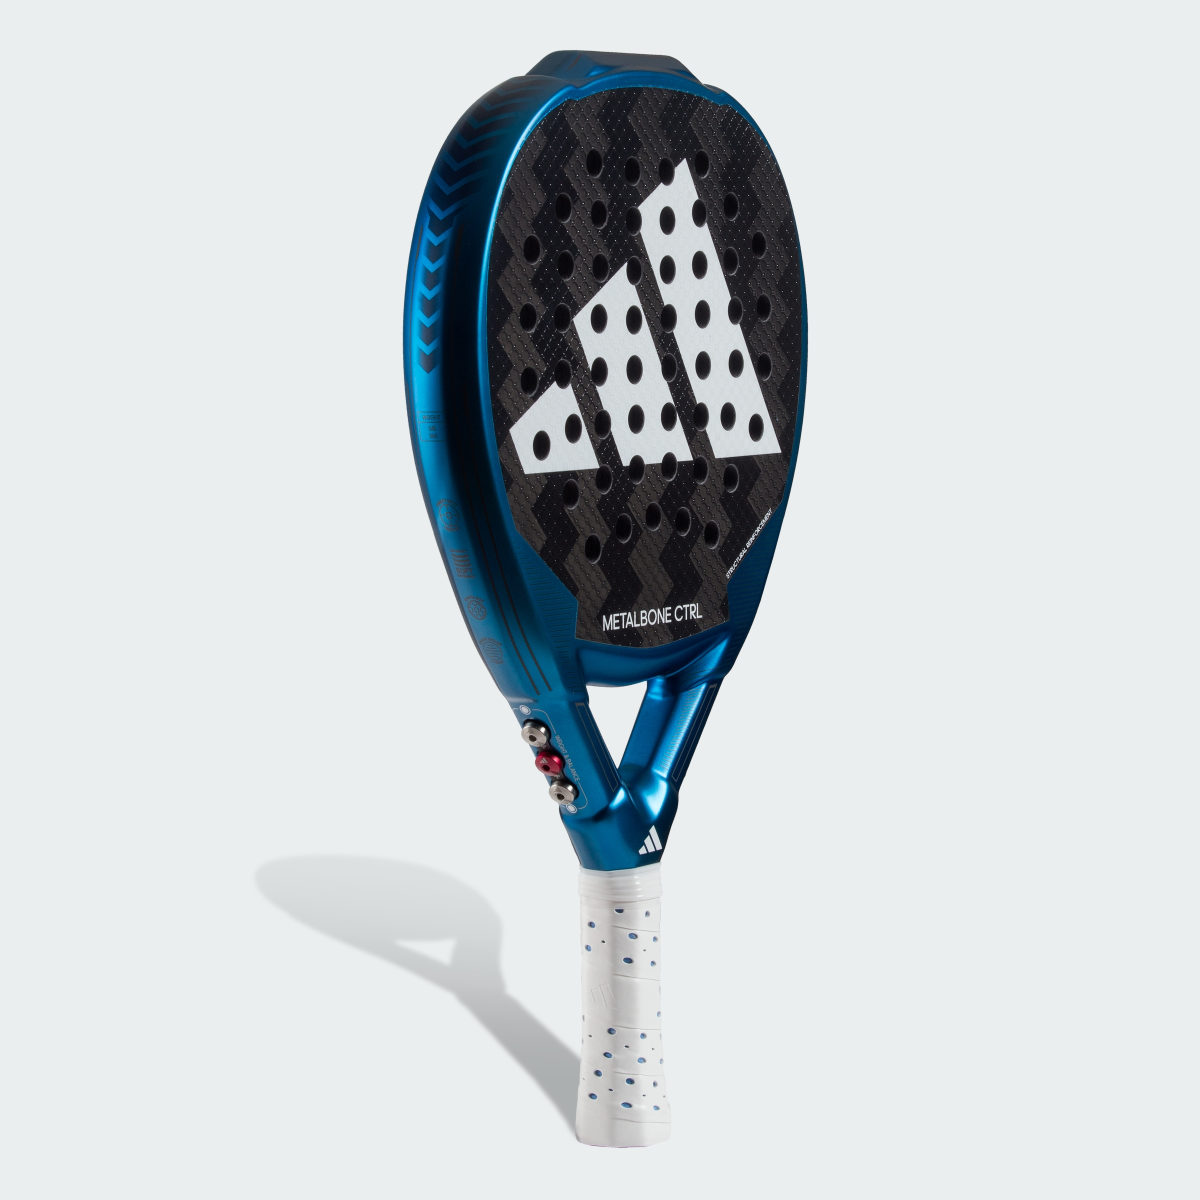 Adidas Metalbone CTRL 3.3 Padel Racket. 3